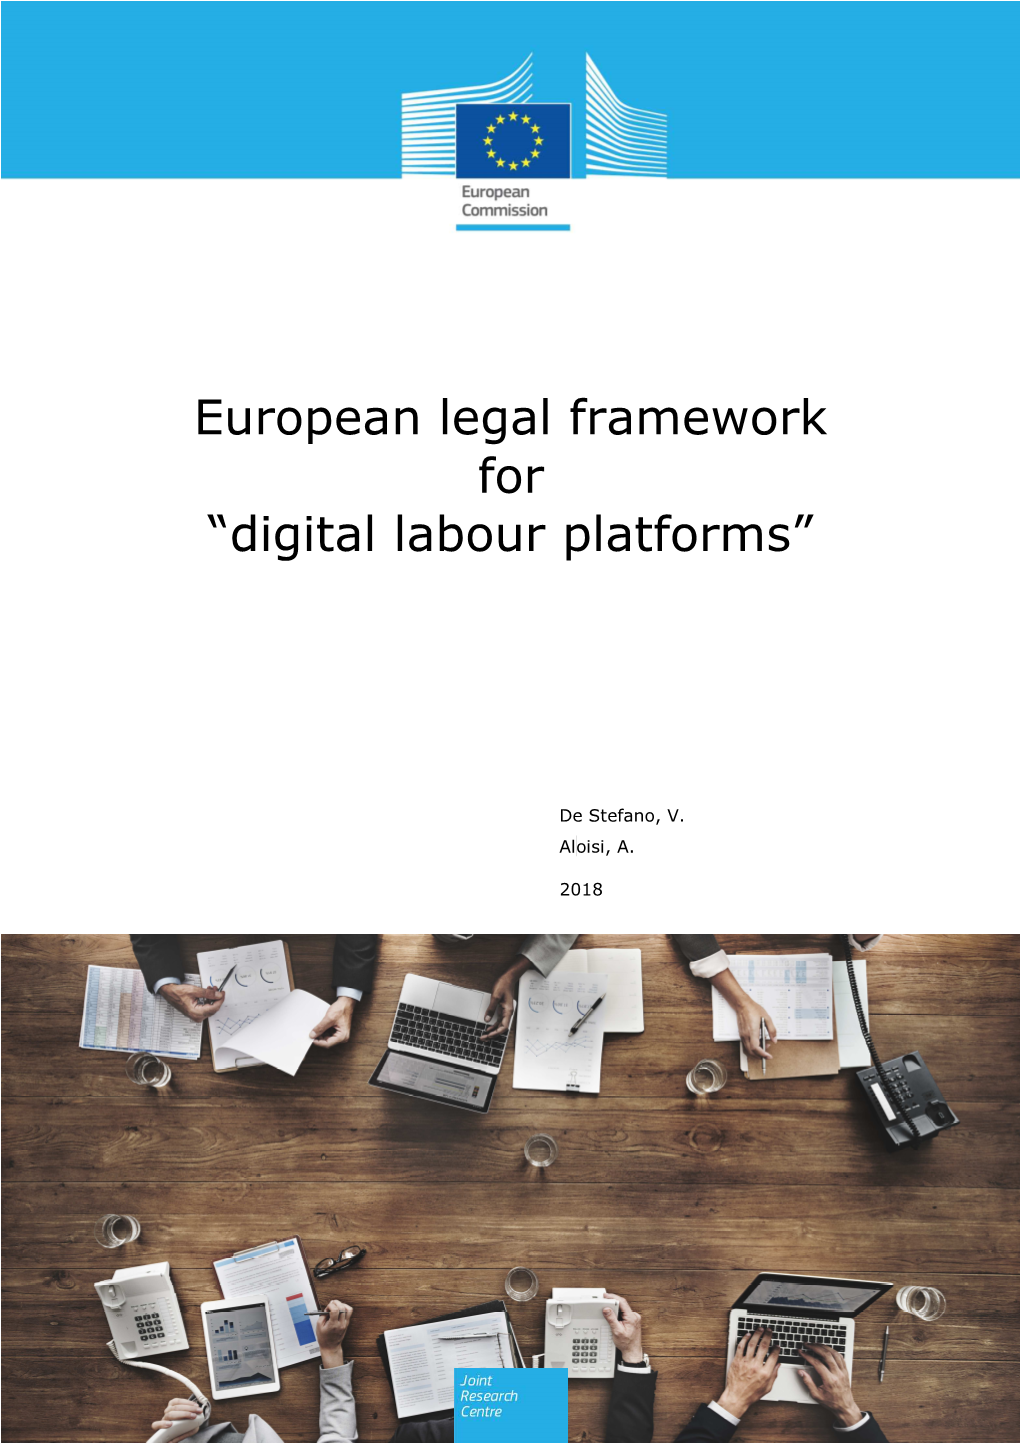 European Legal Framework for Digital Labour Platforms, European Commission, Luxembourg, 2018, ISBN 978-92-79-94131-3, Doi:10.2760/78590, JRC112243